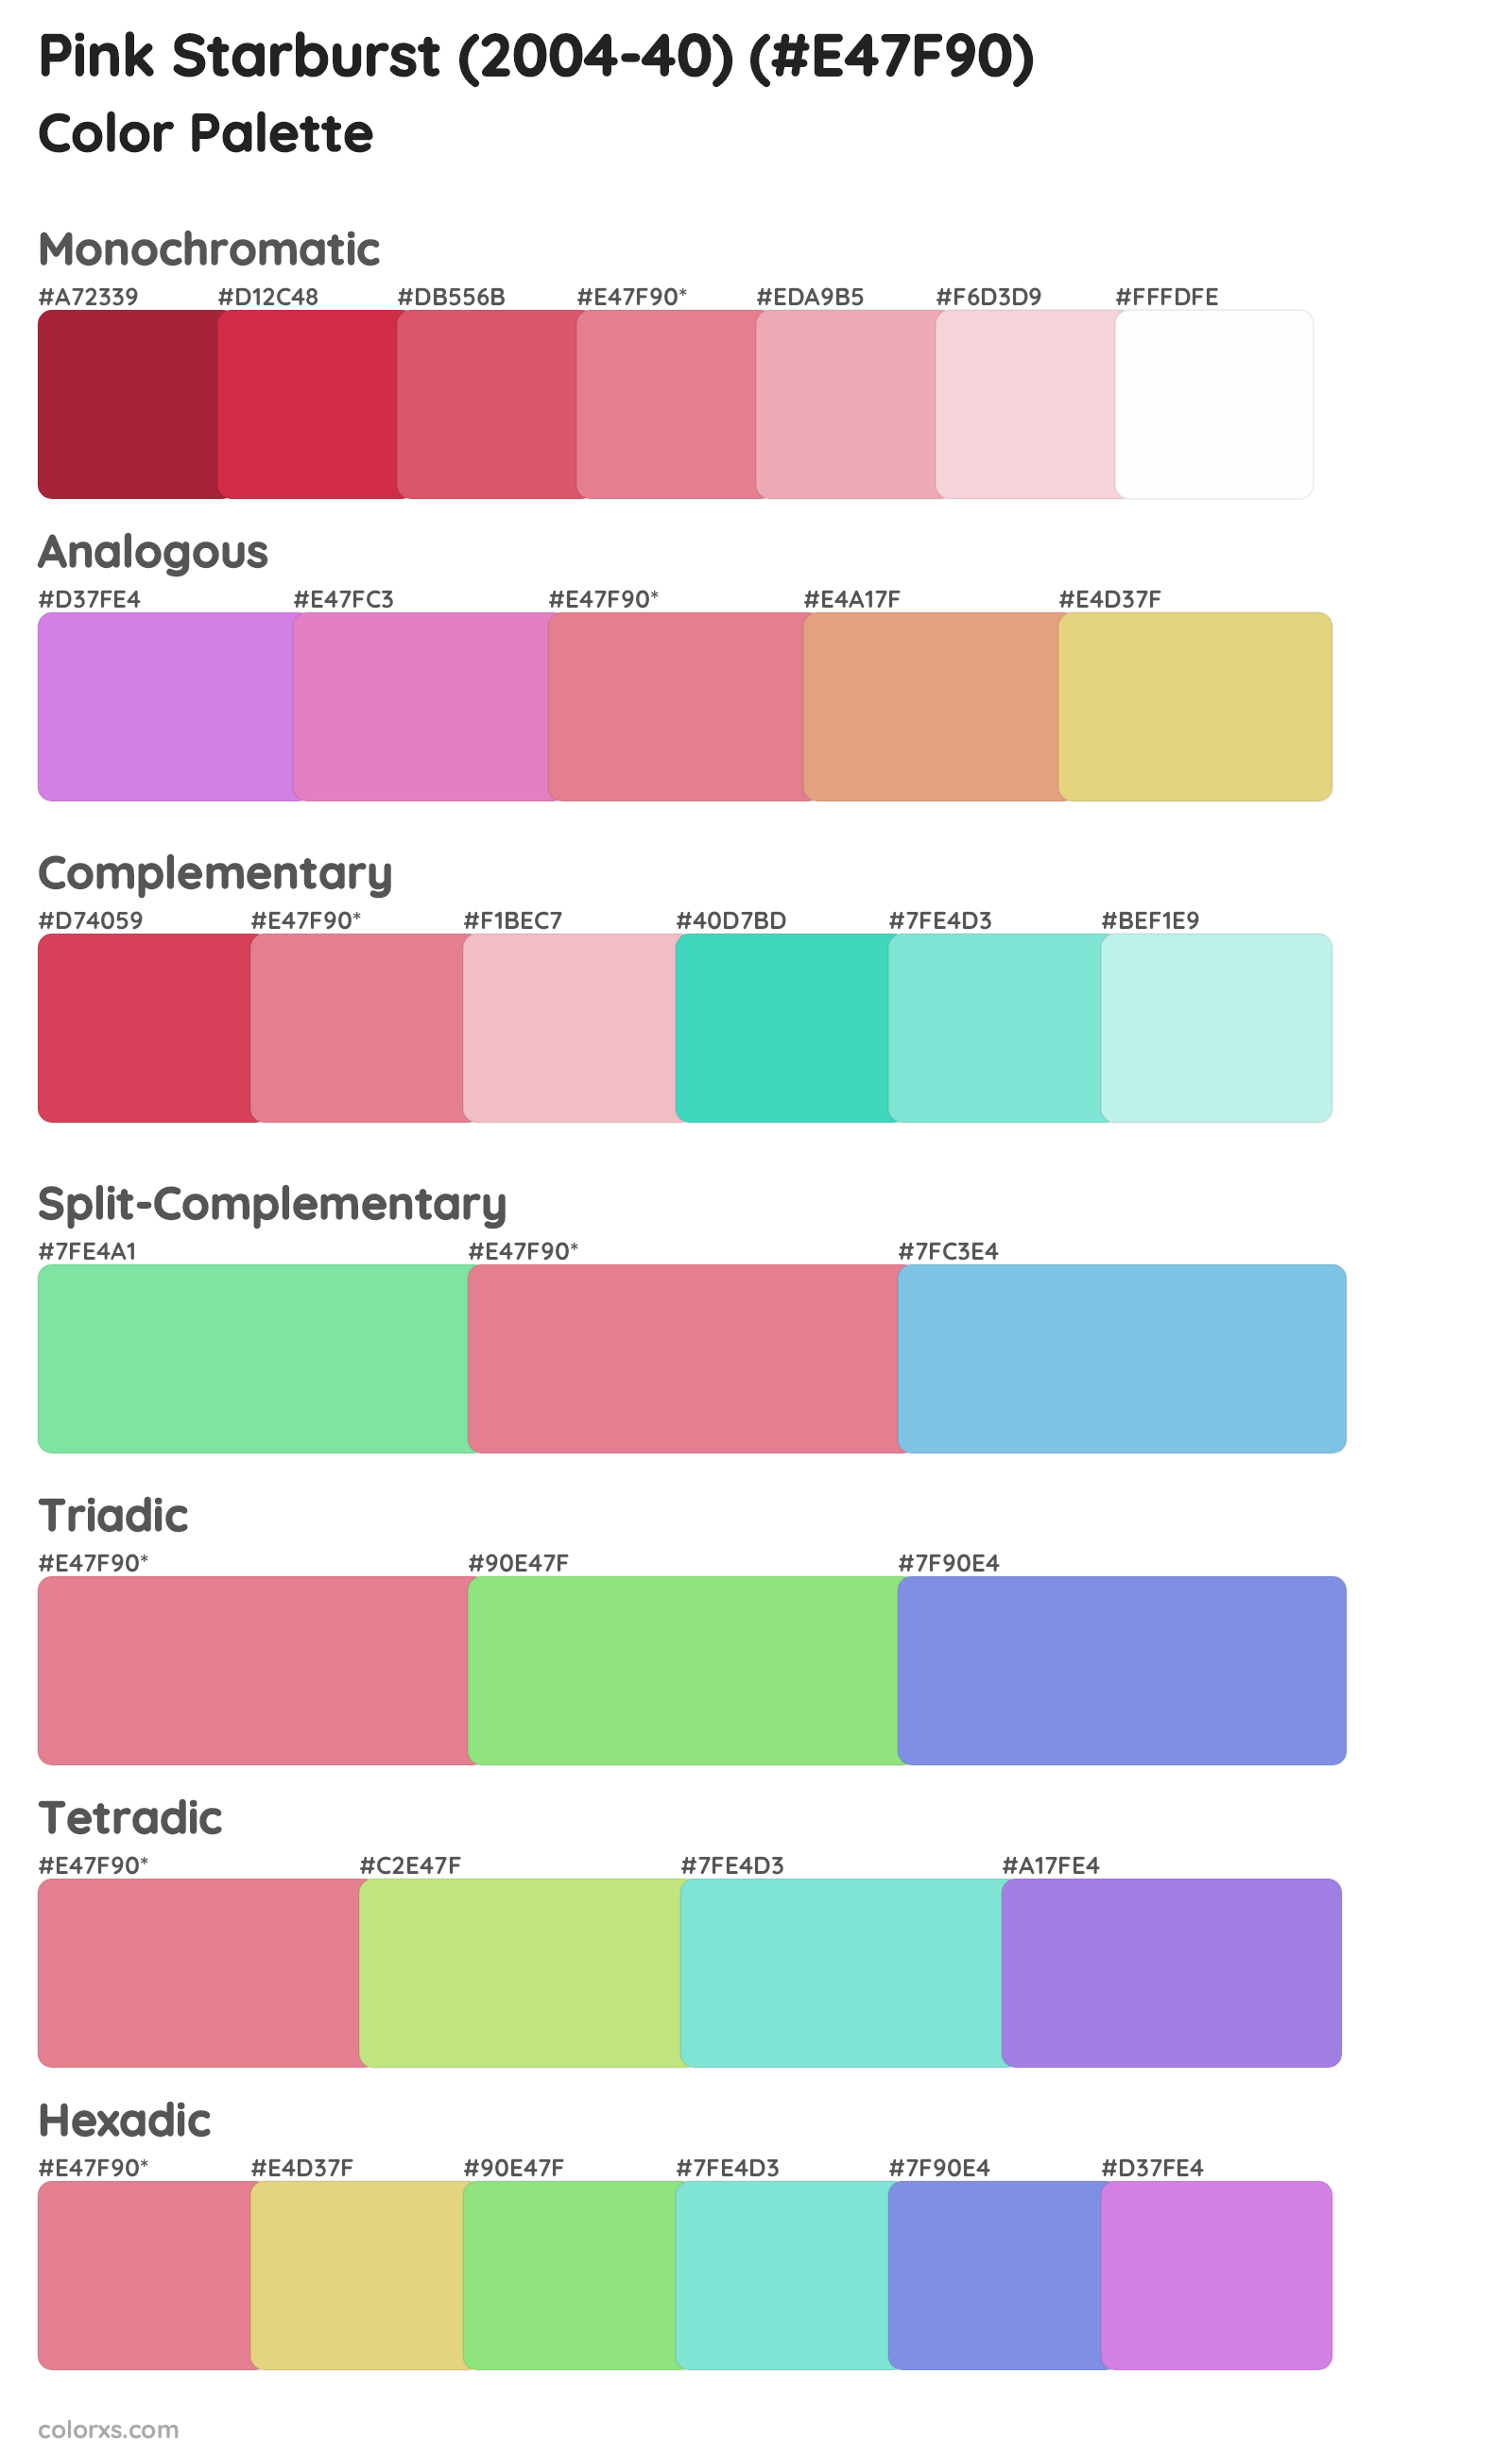 Pink Starburst (2004-40) Color Scheme Palettes